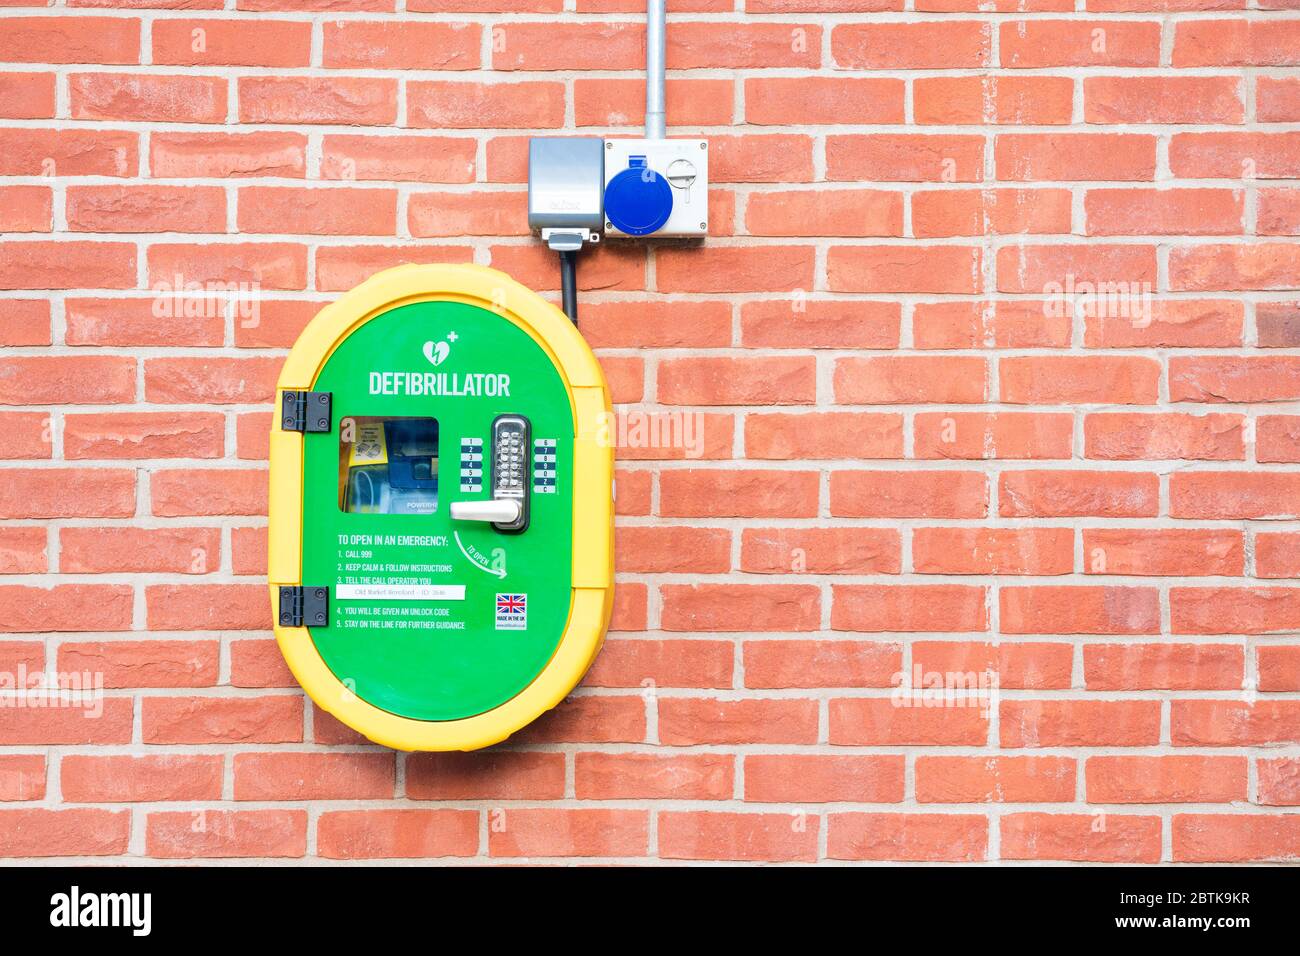 Defibrillator on a brick wall, UK. Stock Photo